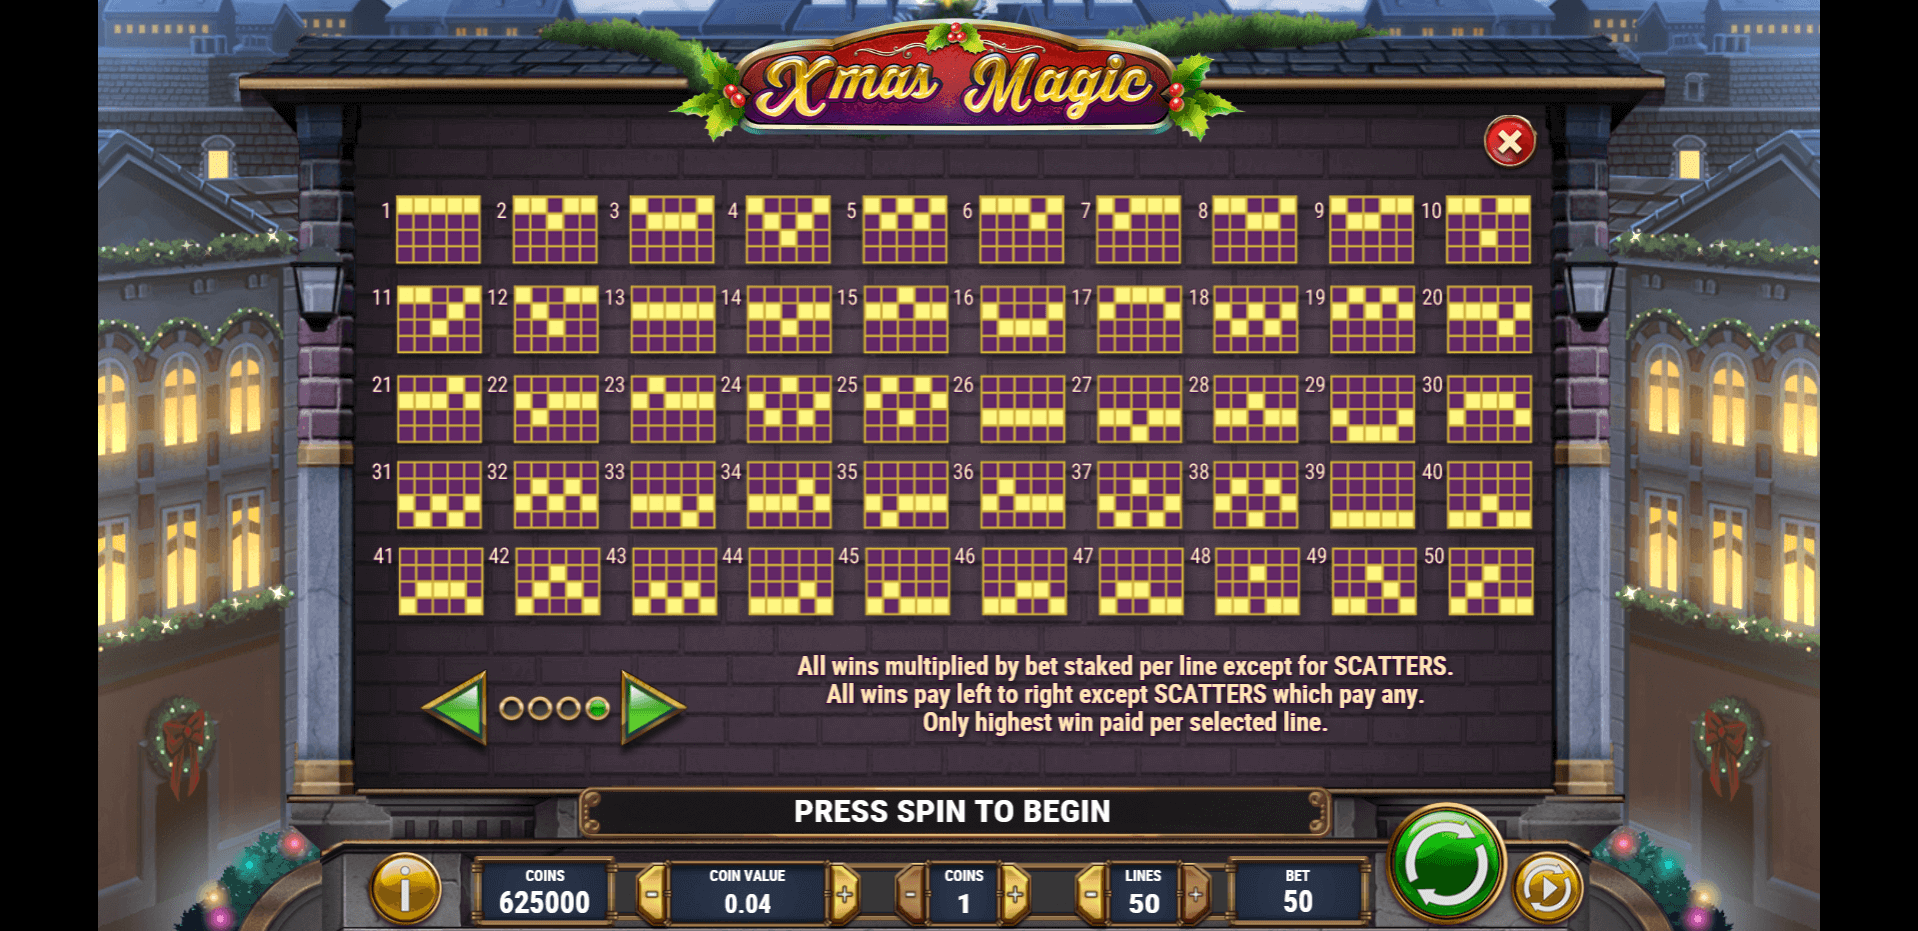 xmas magic slot machine detail image 3